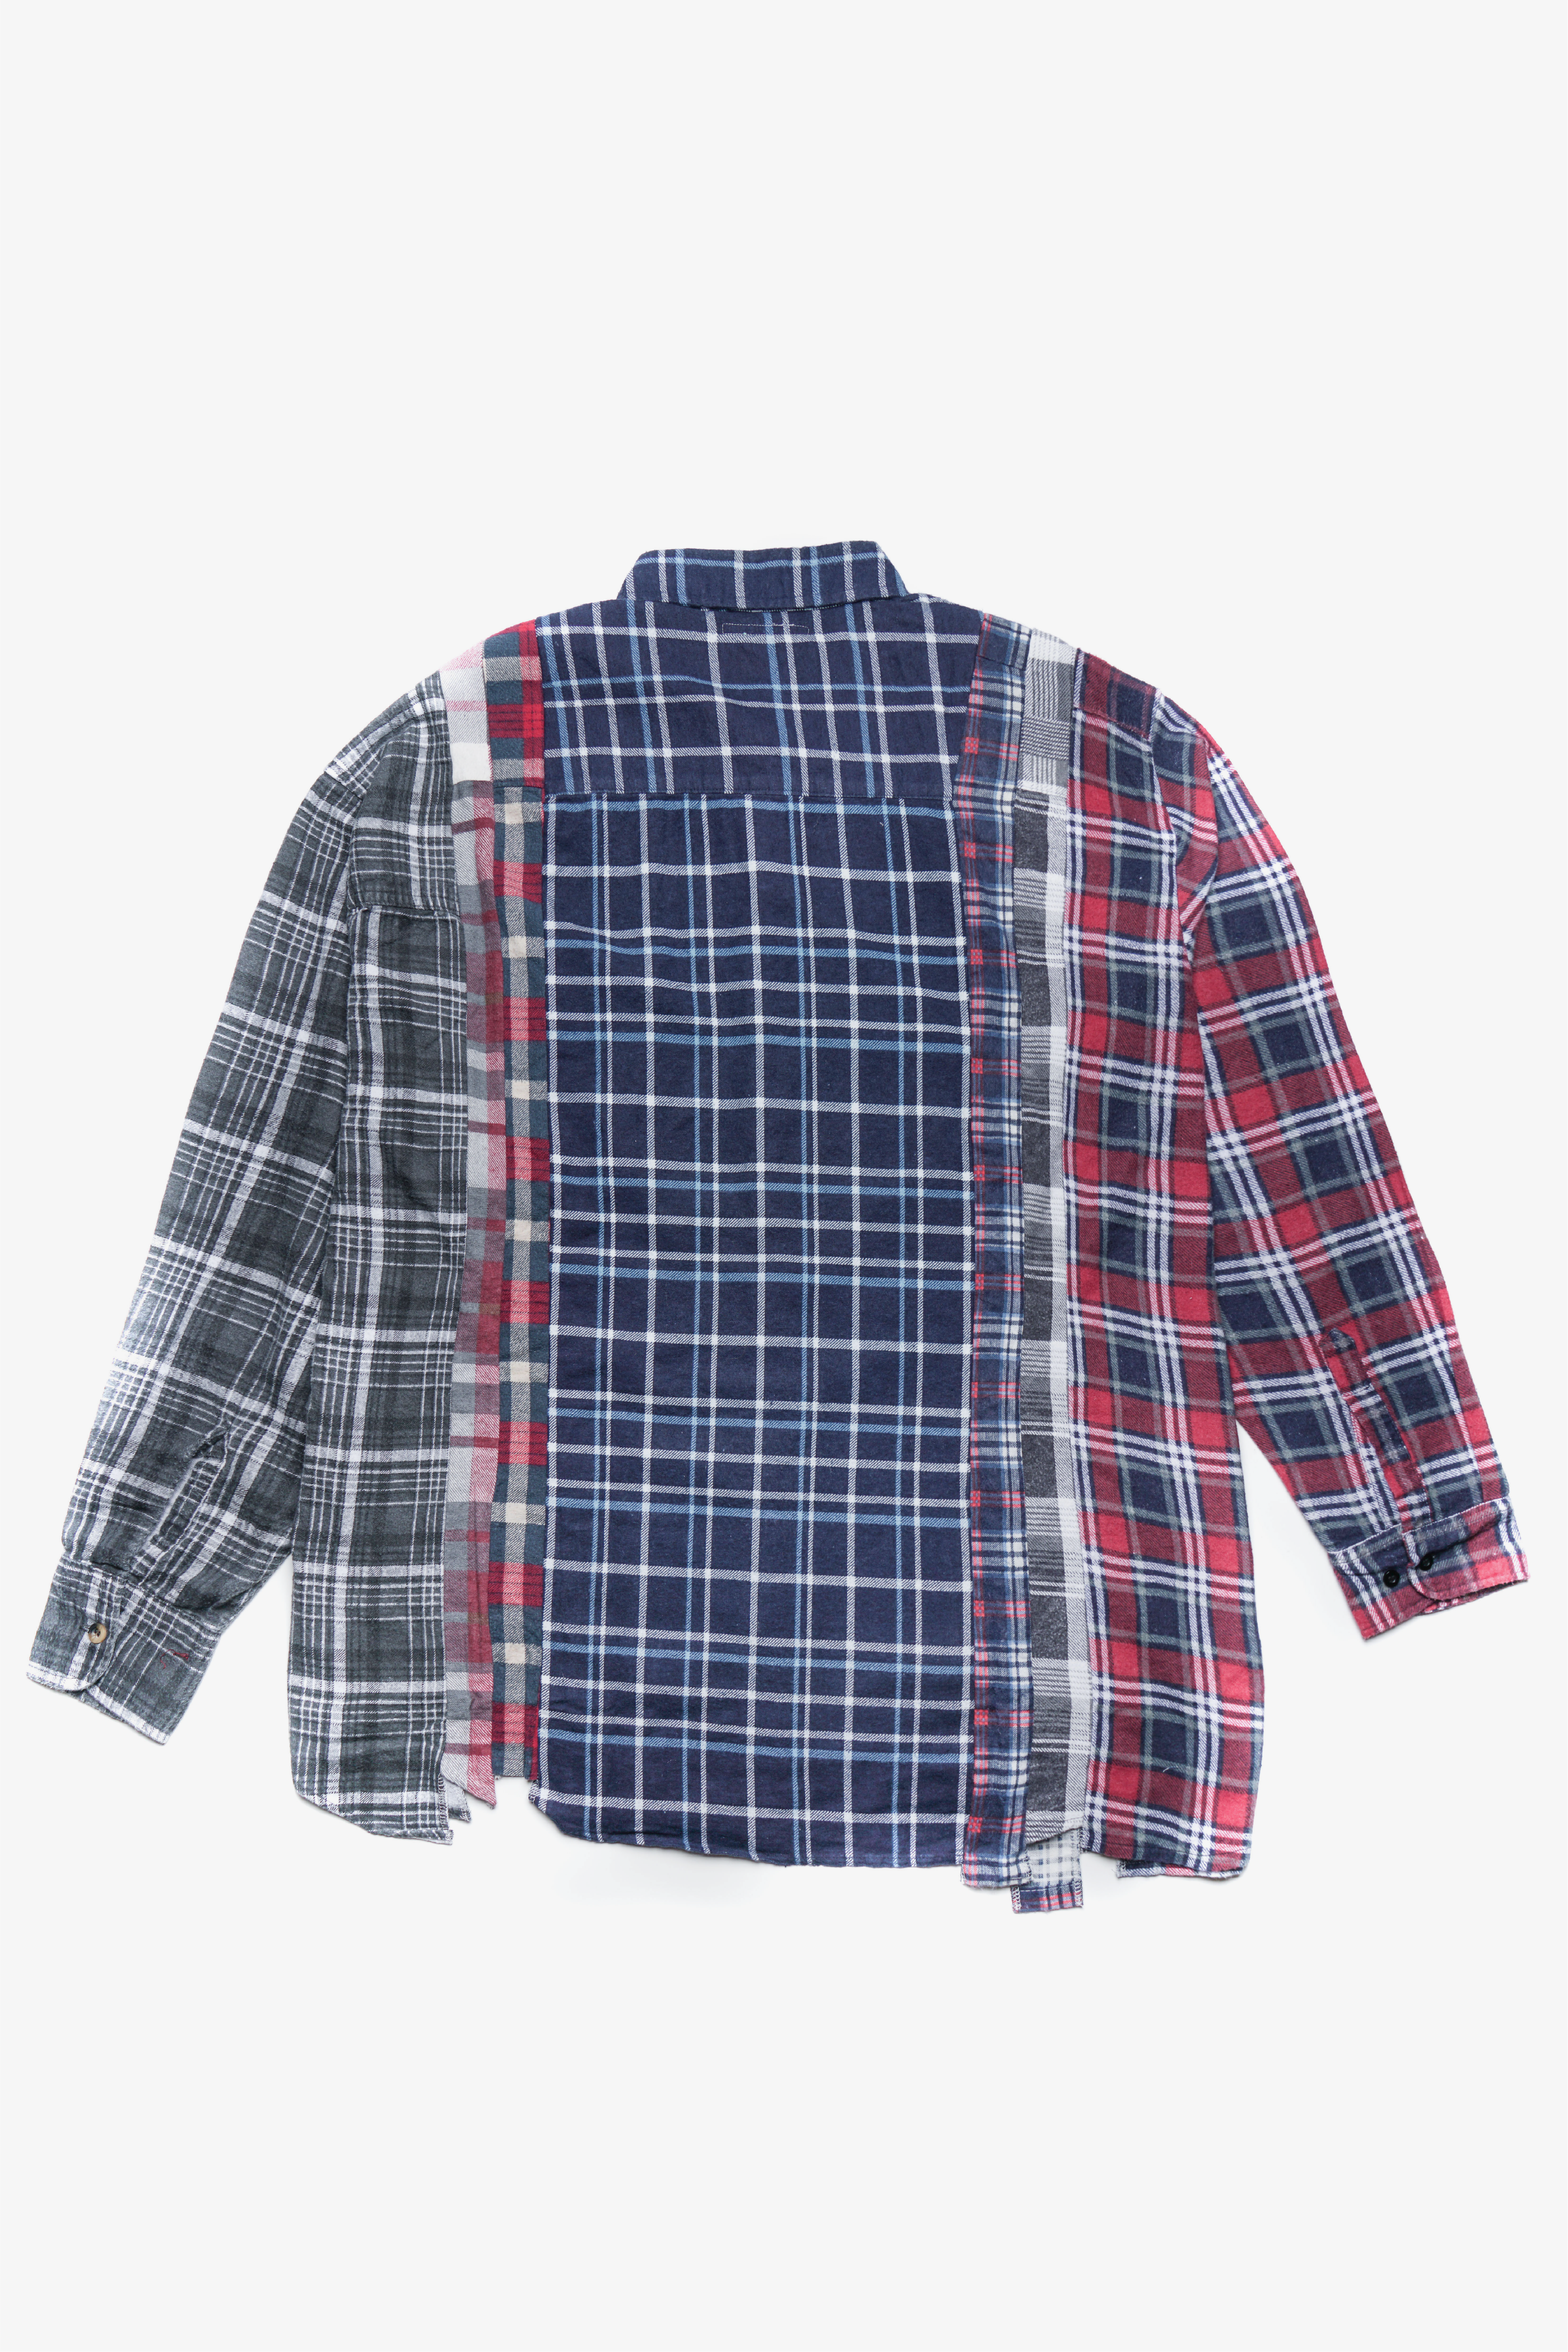 Selectshop FRAME - NEEDLES Flannel Ribbon Wide Shirt Shirts Dubai